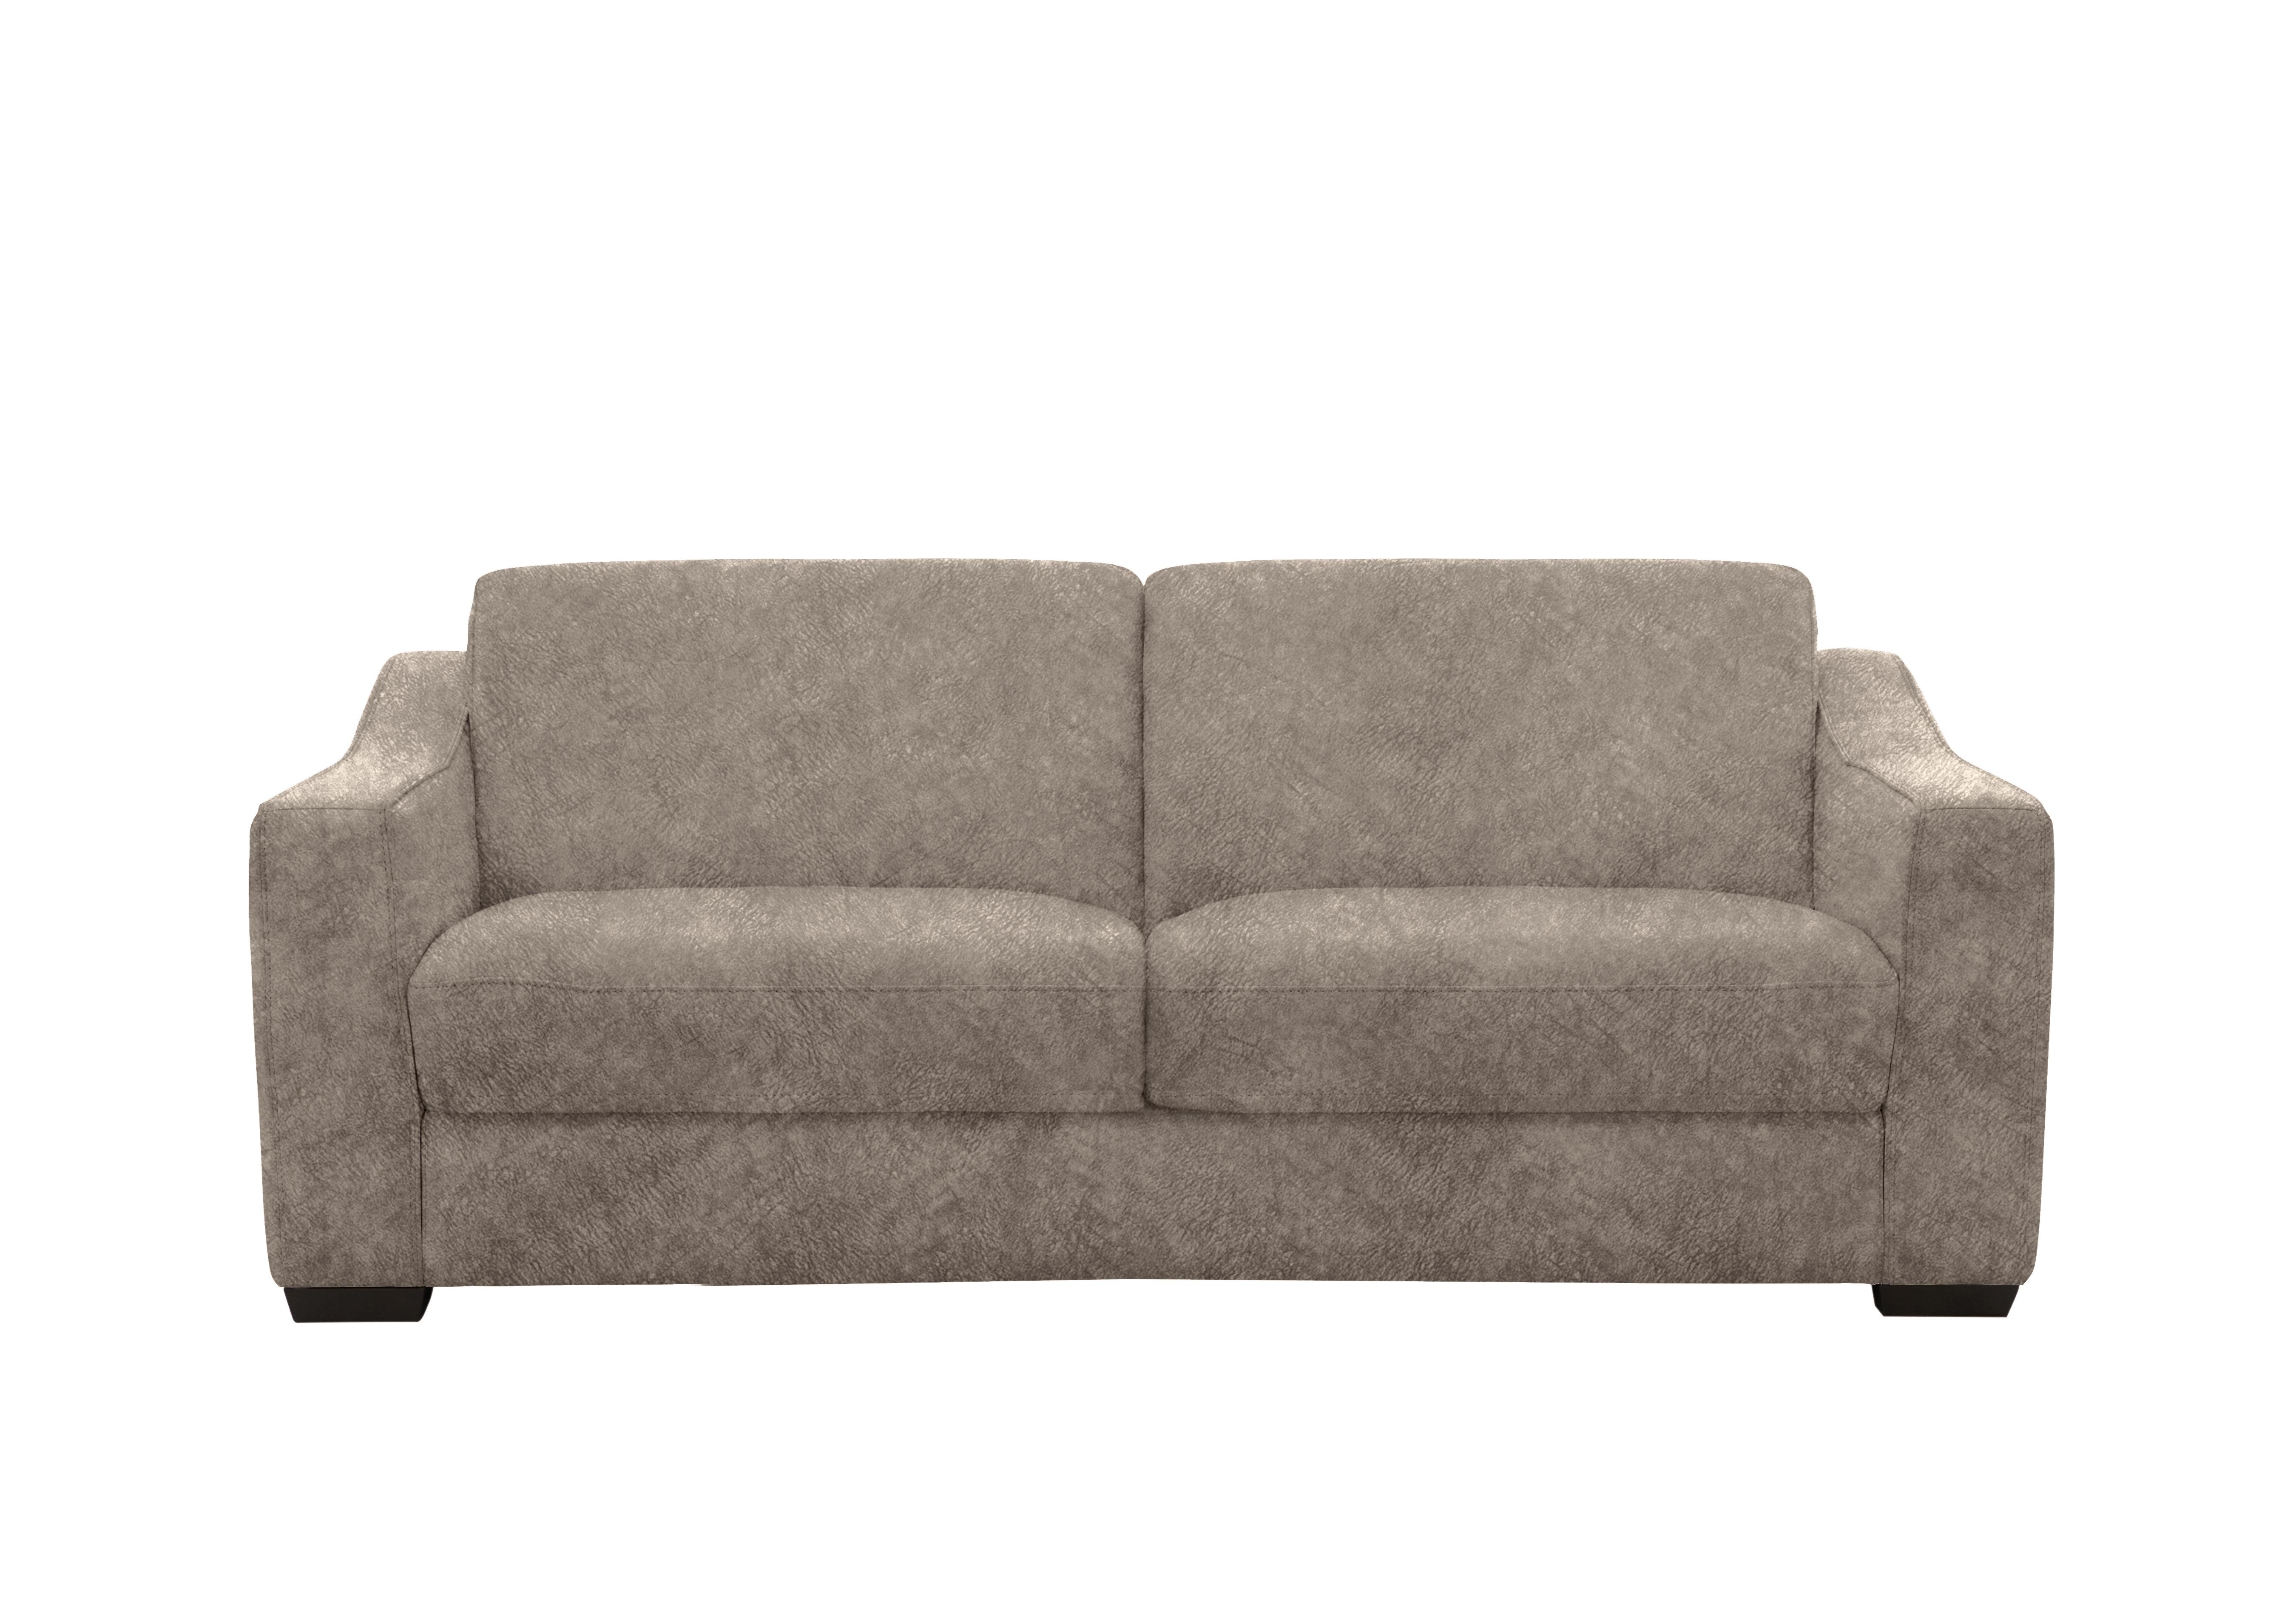 Optimus 3 Seater Fabric Sofa in Bfa-Bnn-R29 Fv1 Mink on Furniture Village